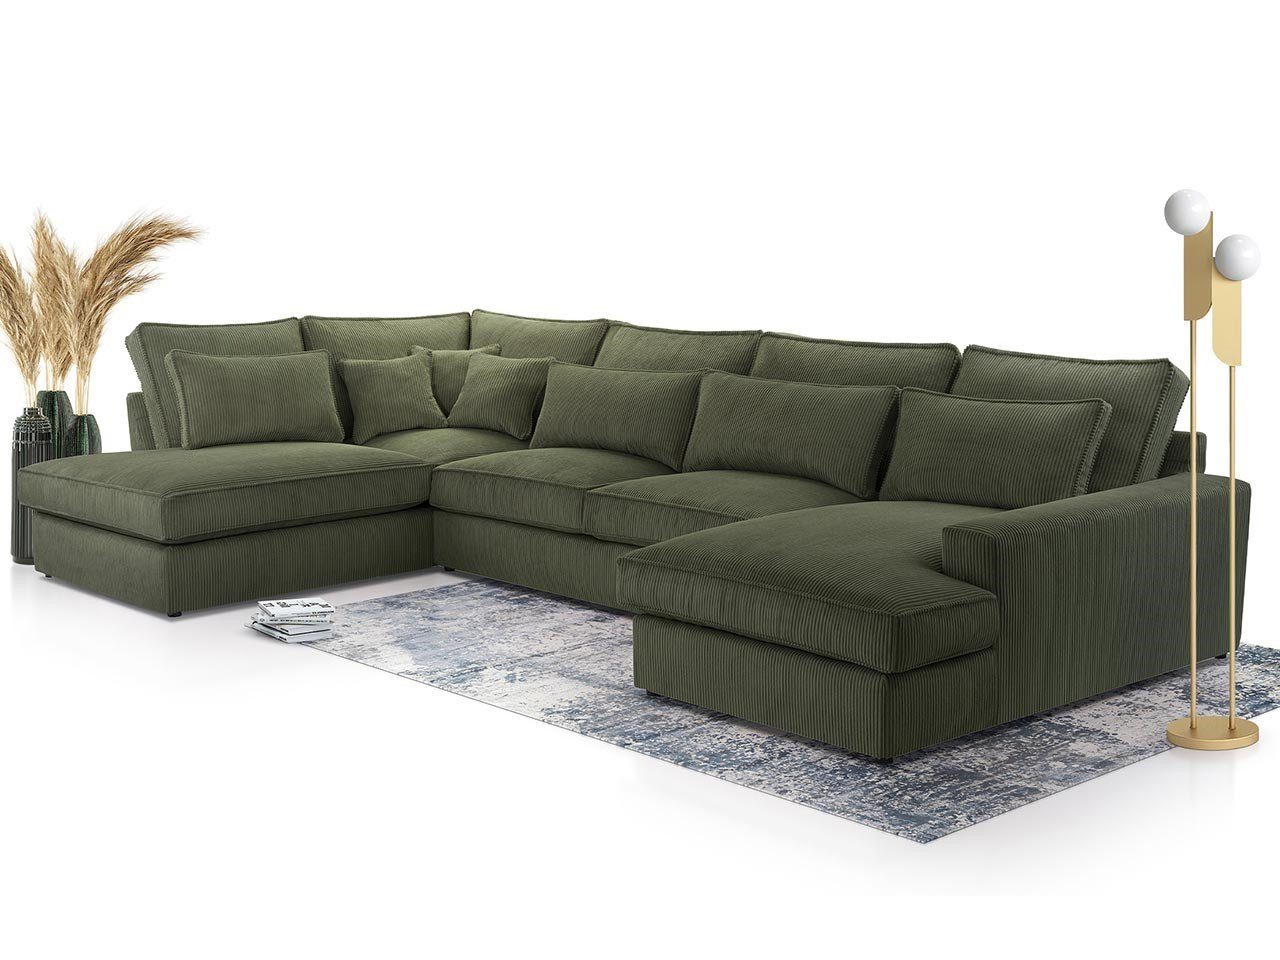 MKS MÖBEL Ecksofa CANES U, U - Form Couch, lose Kissen, modern Design Dunkelgrün Lincoln